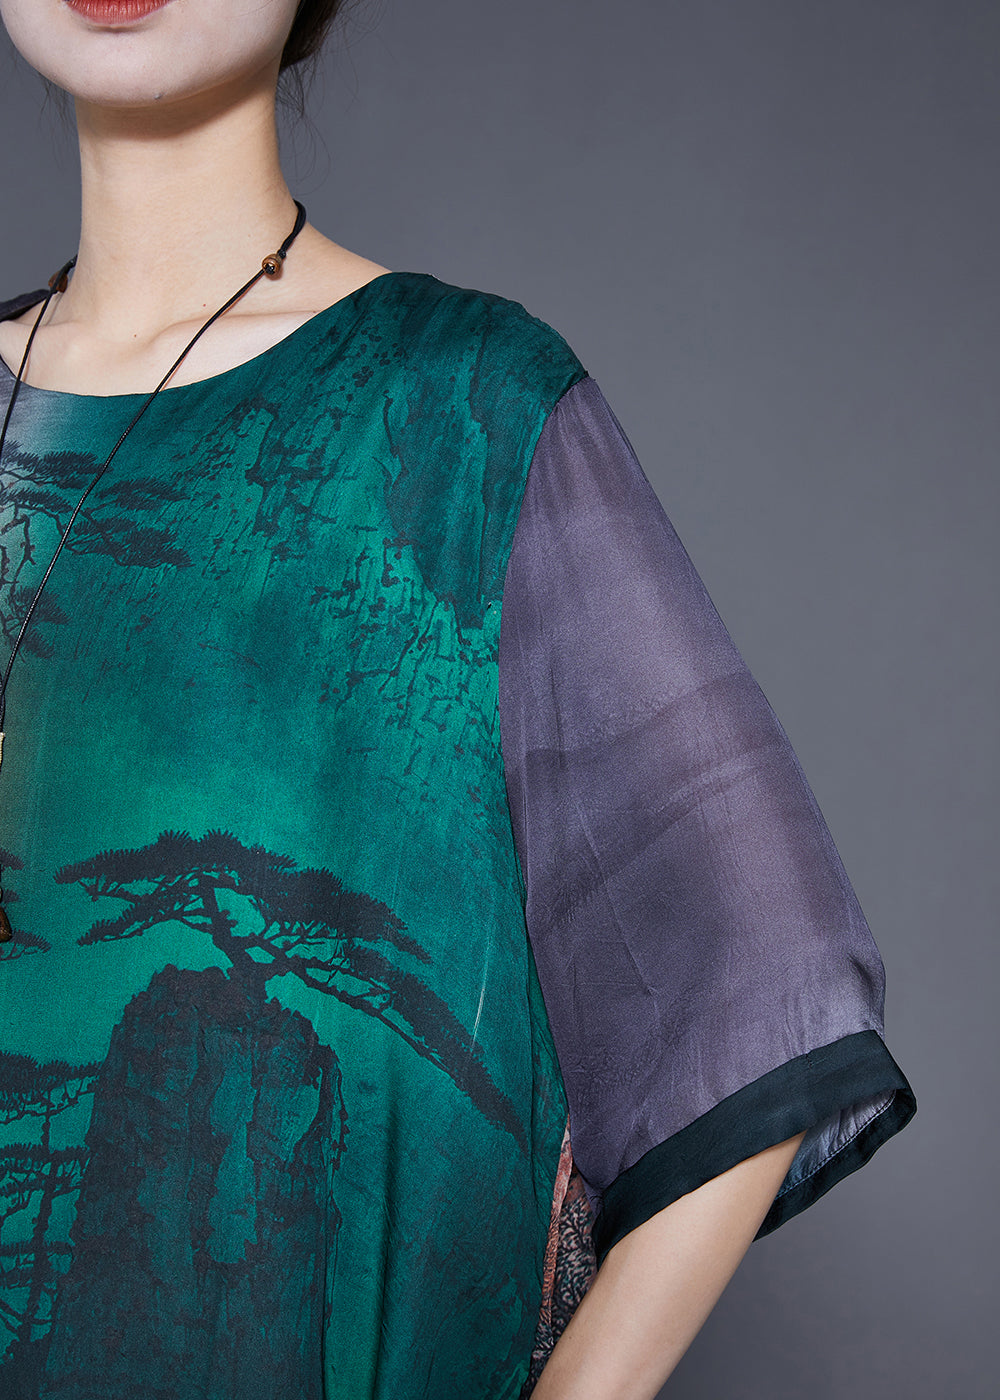 Art Oversized Patchwork Landscape Painting Silk Shirt Half Sleeve Ada Fashion